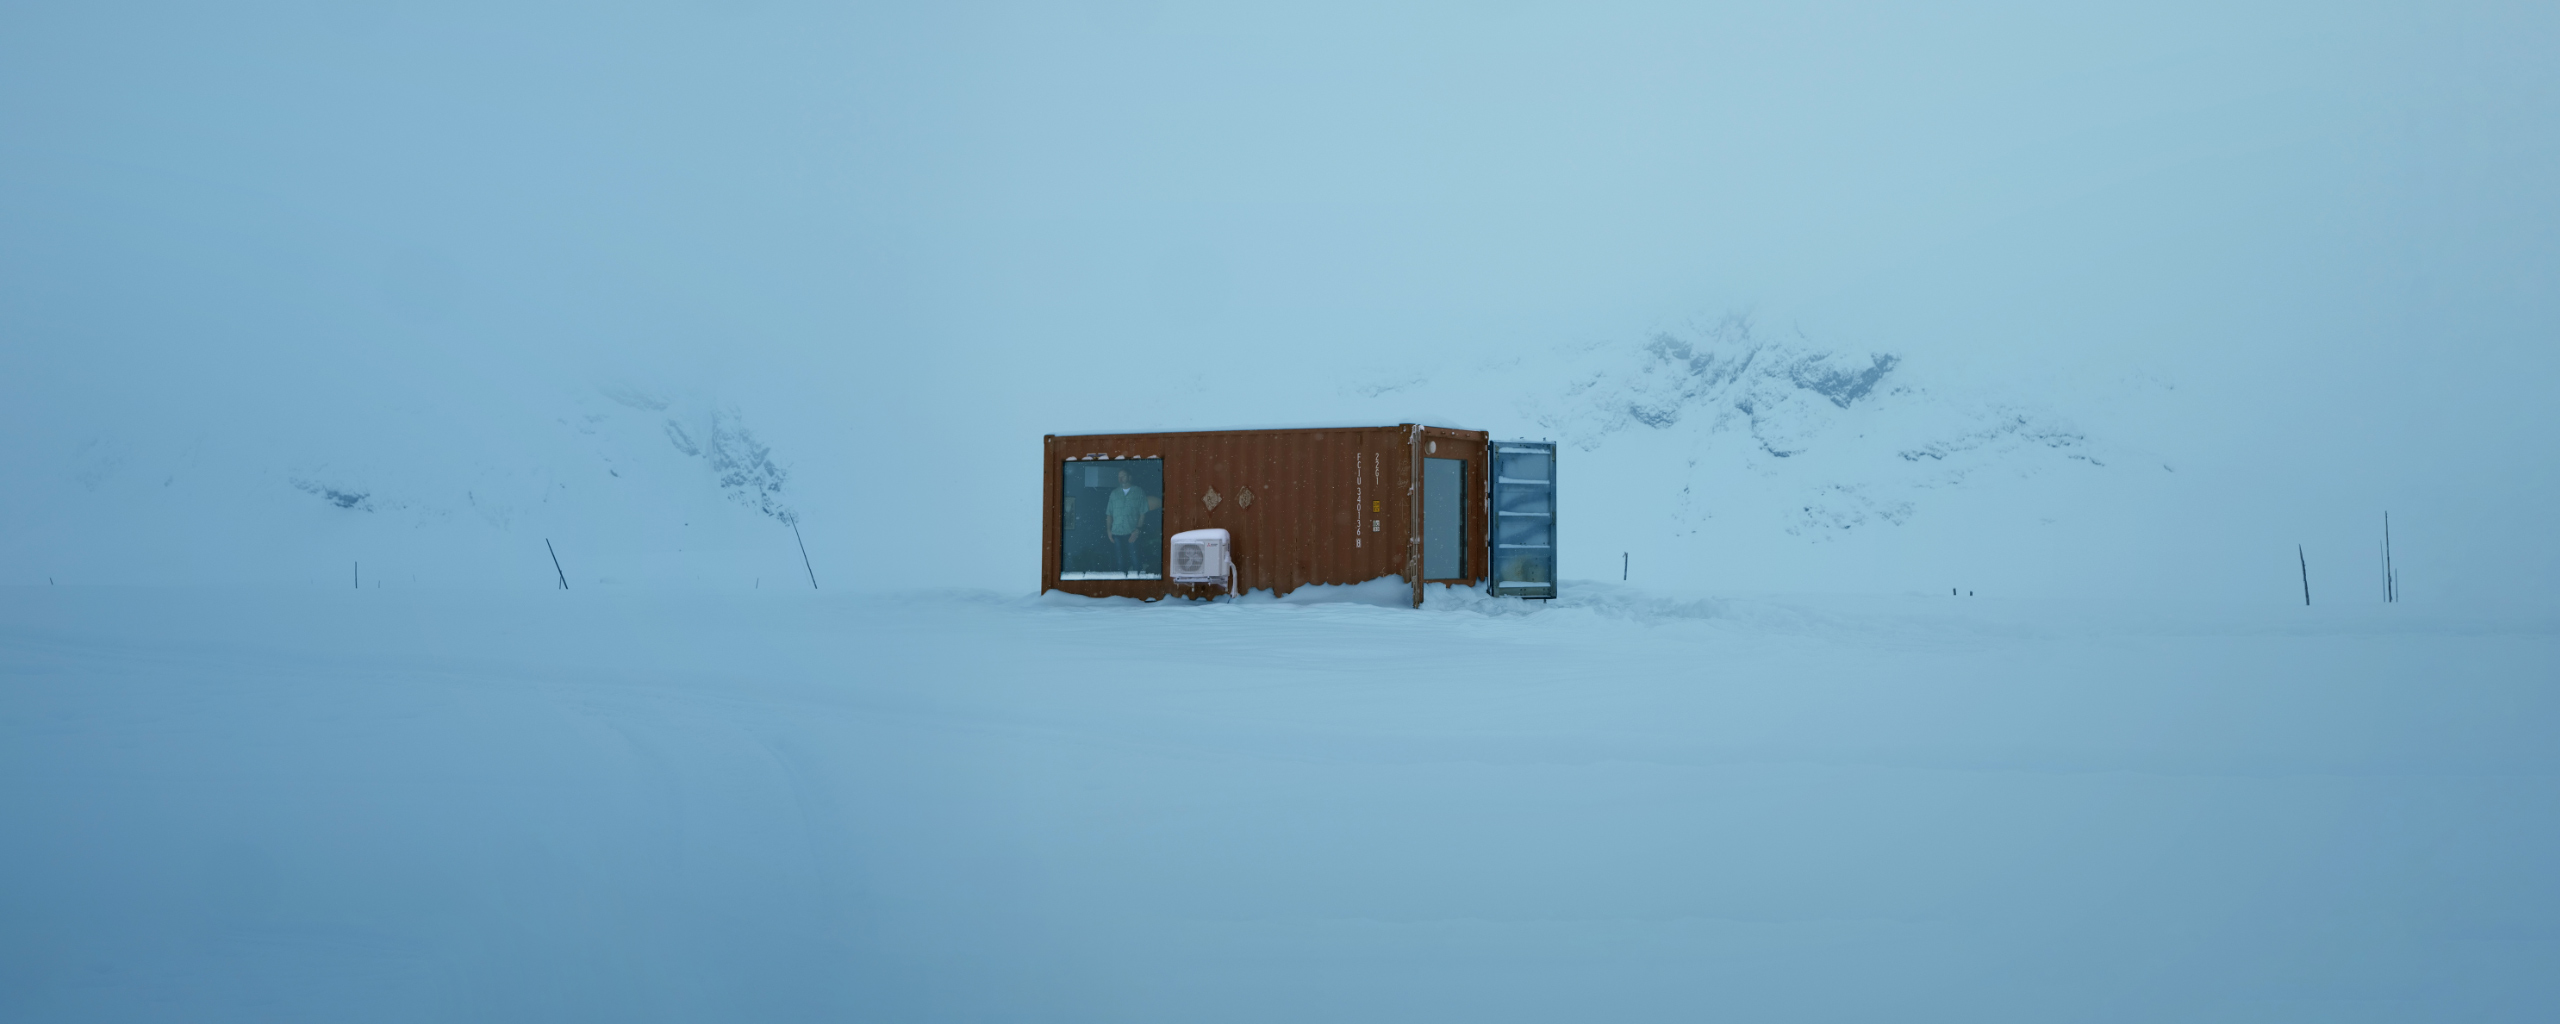 Container ute i vinterlandskap. Foto.